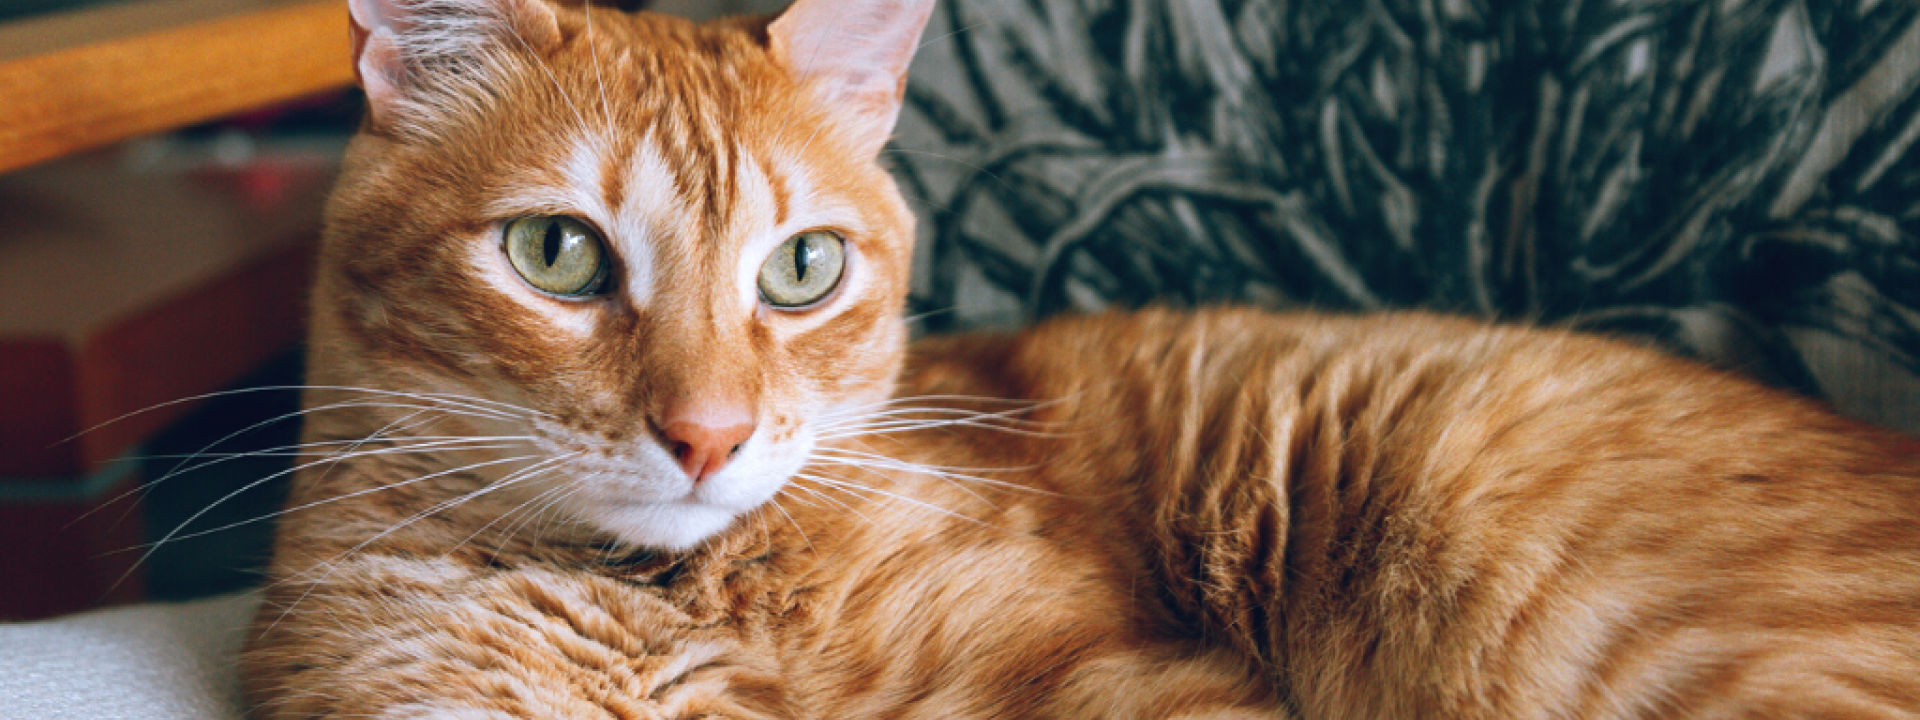 Orange tabby cat lying on chair